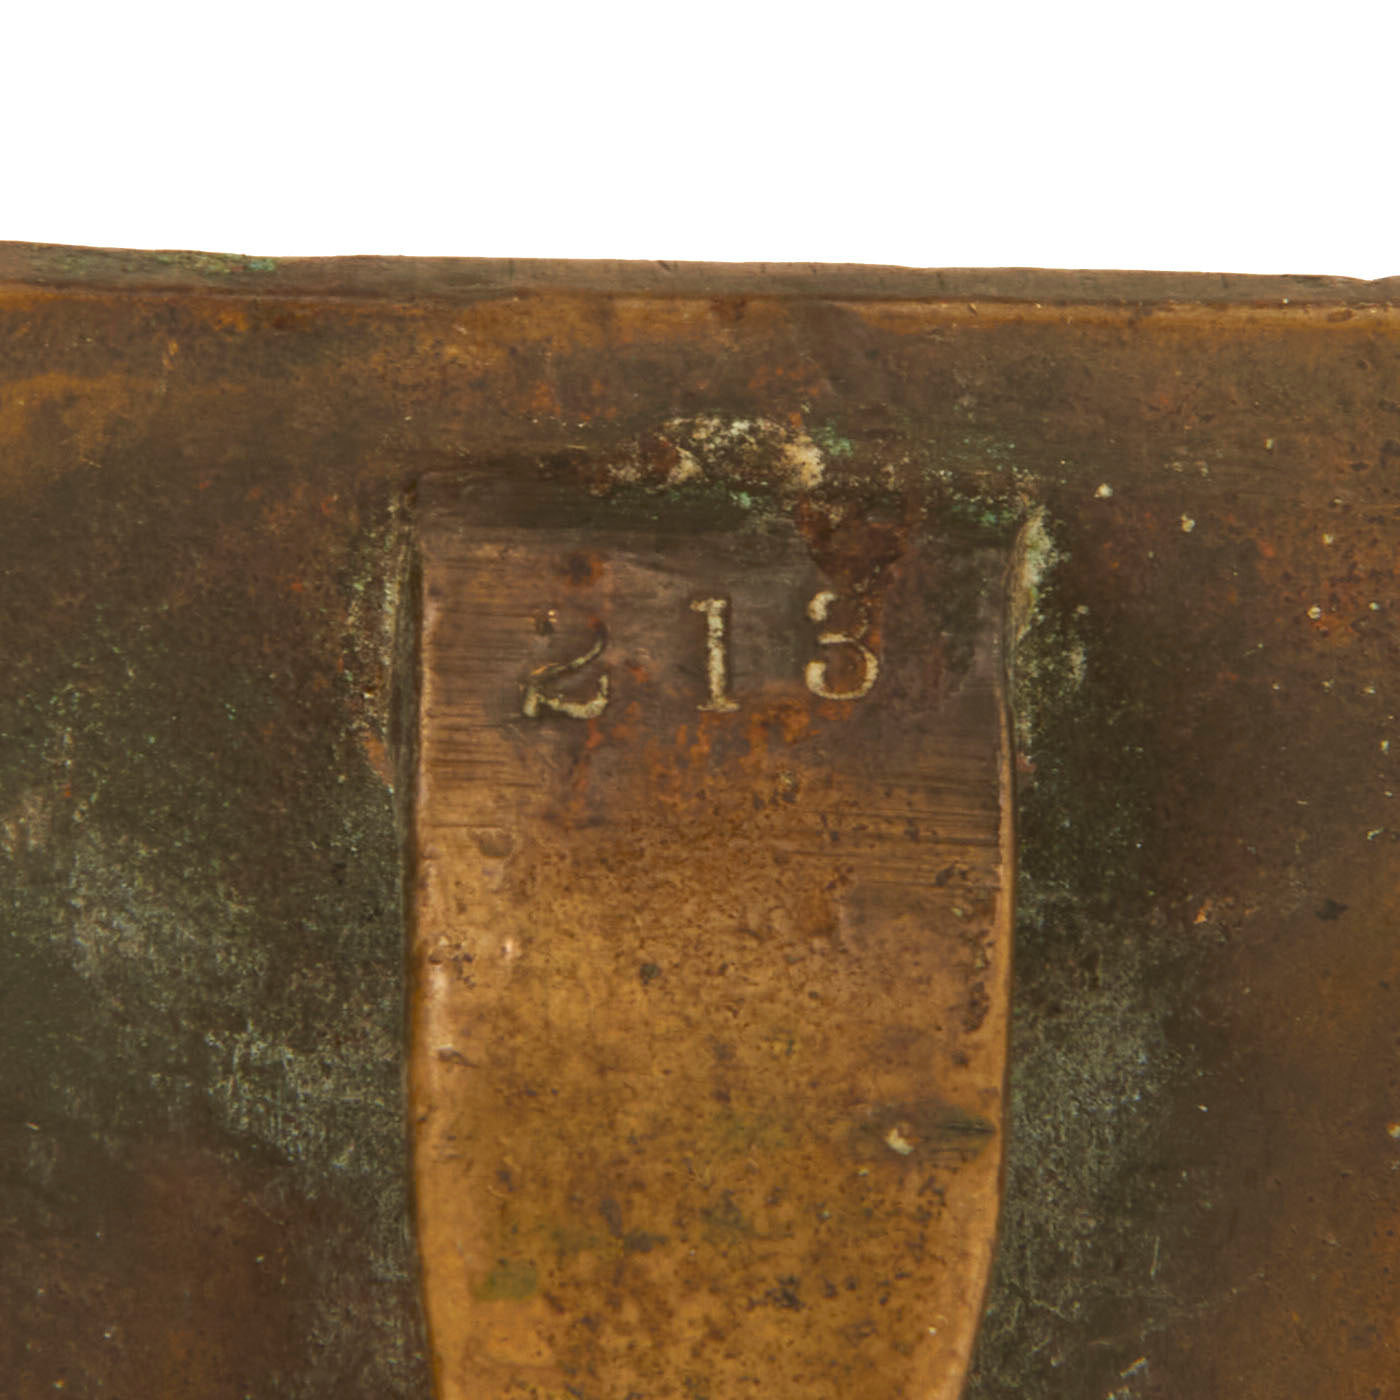 Original U.S. Civil War M-1851 NCO Belt with Pistol Cartridge Box